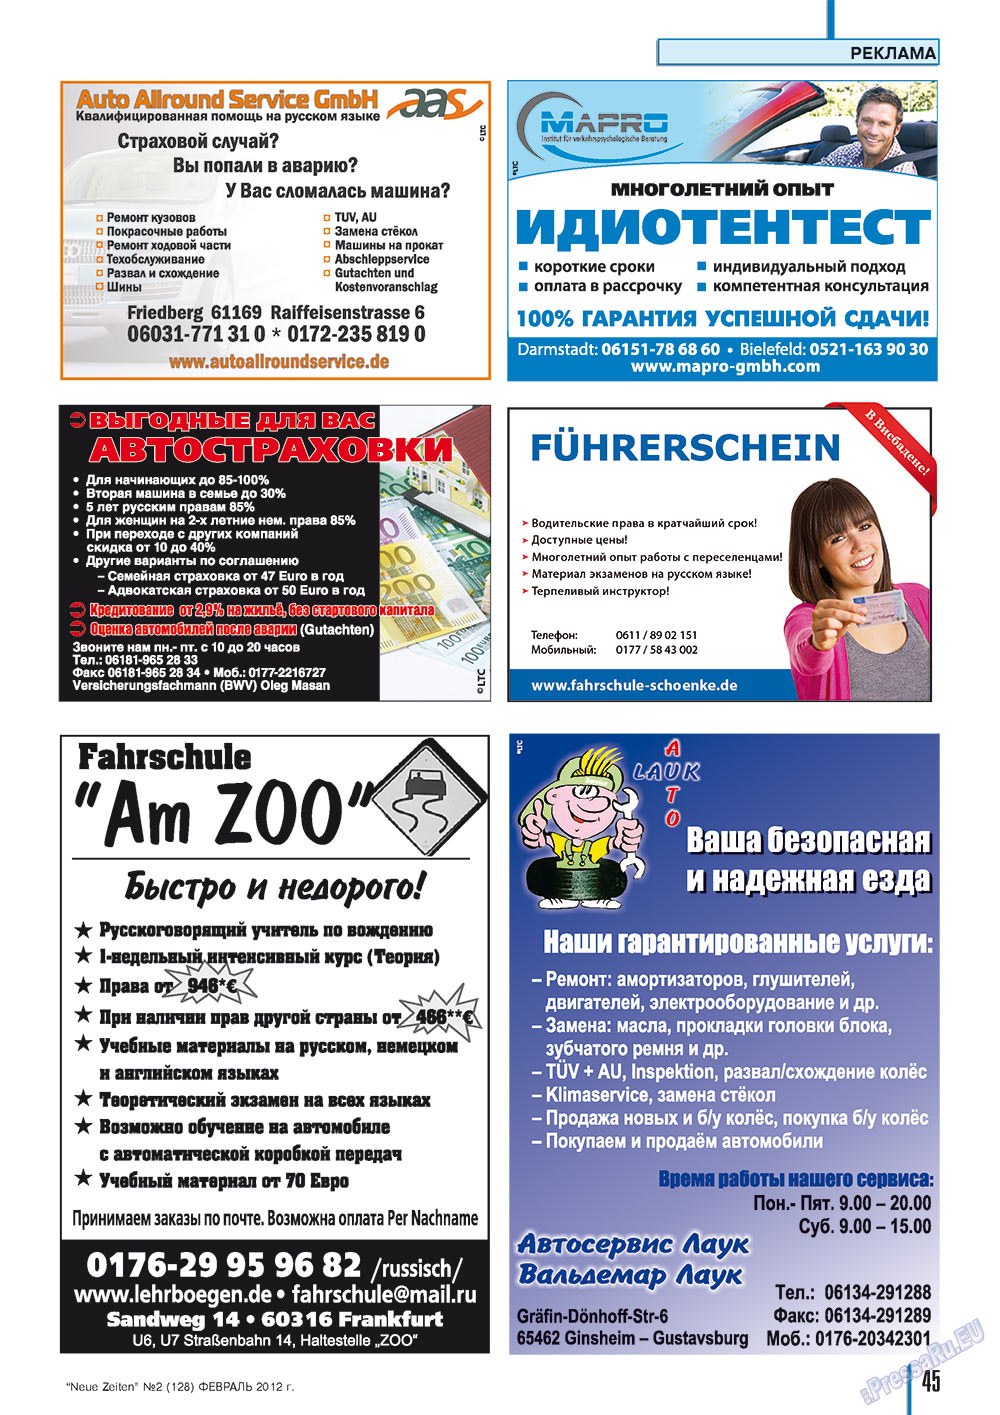 Neue Zeiten (журнал). 2012 год, номер 2, стр. 45